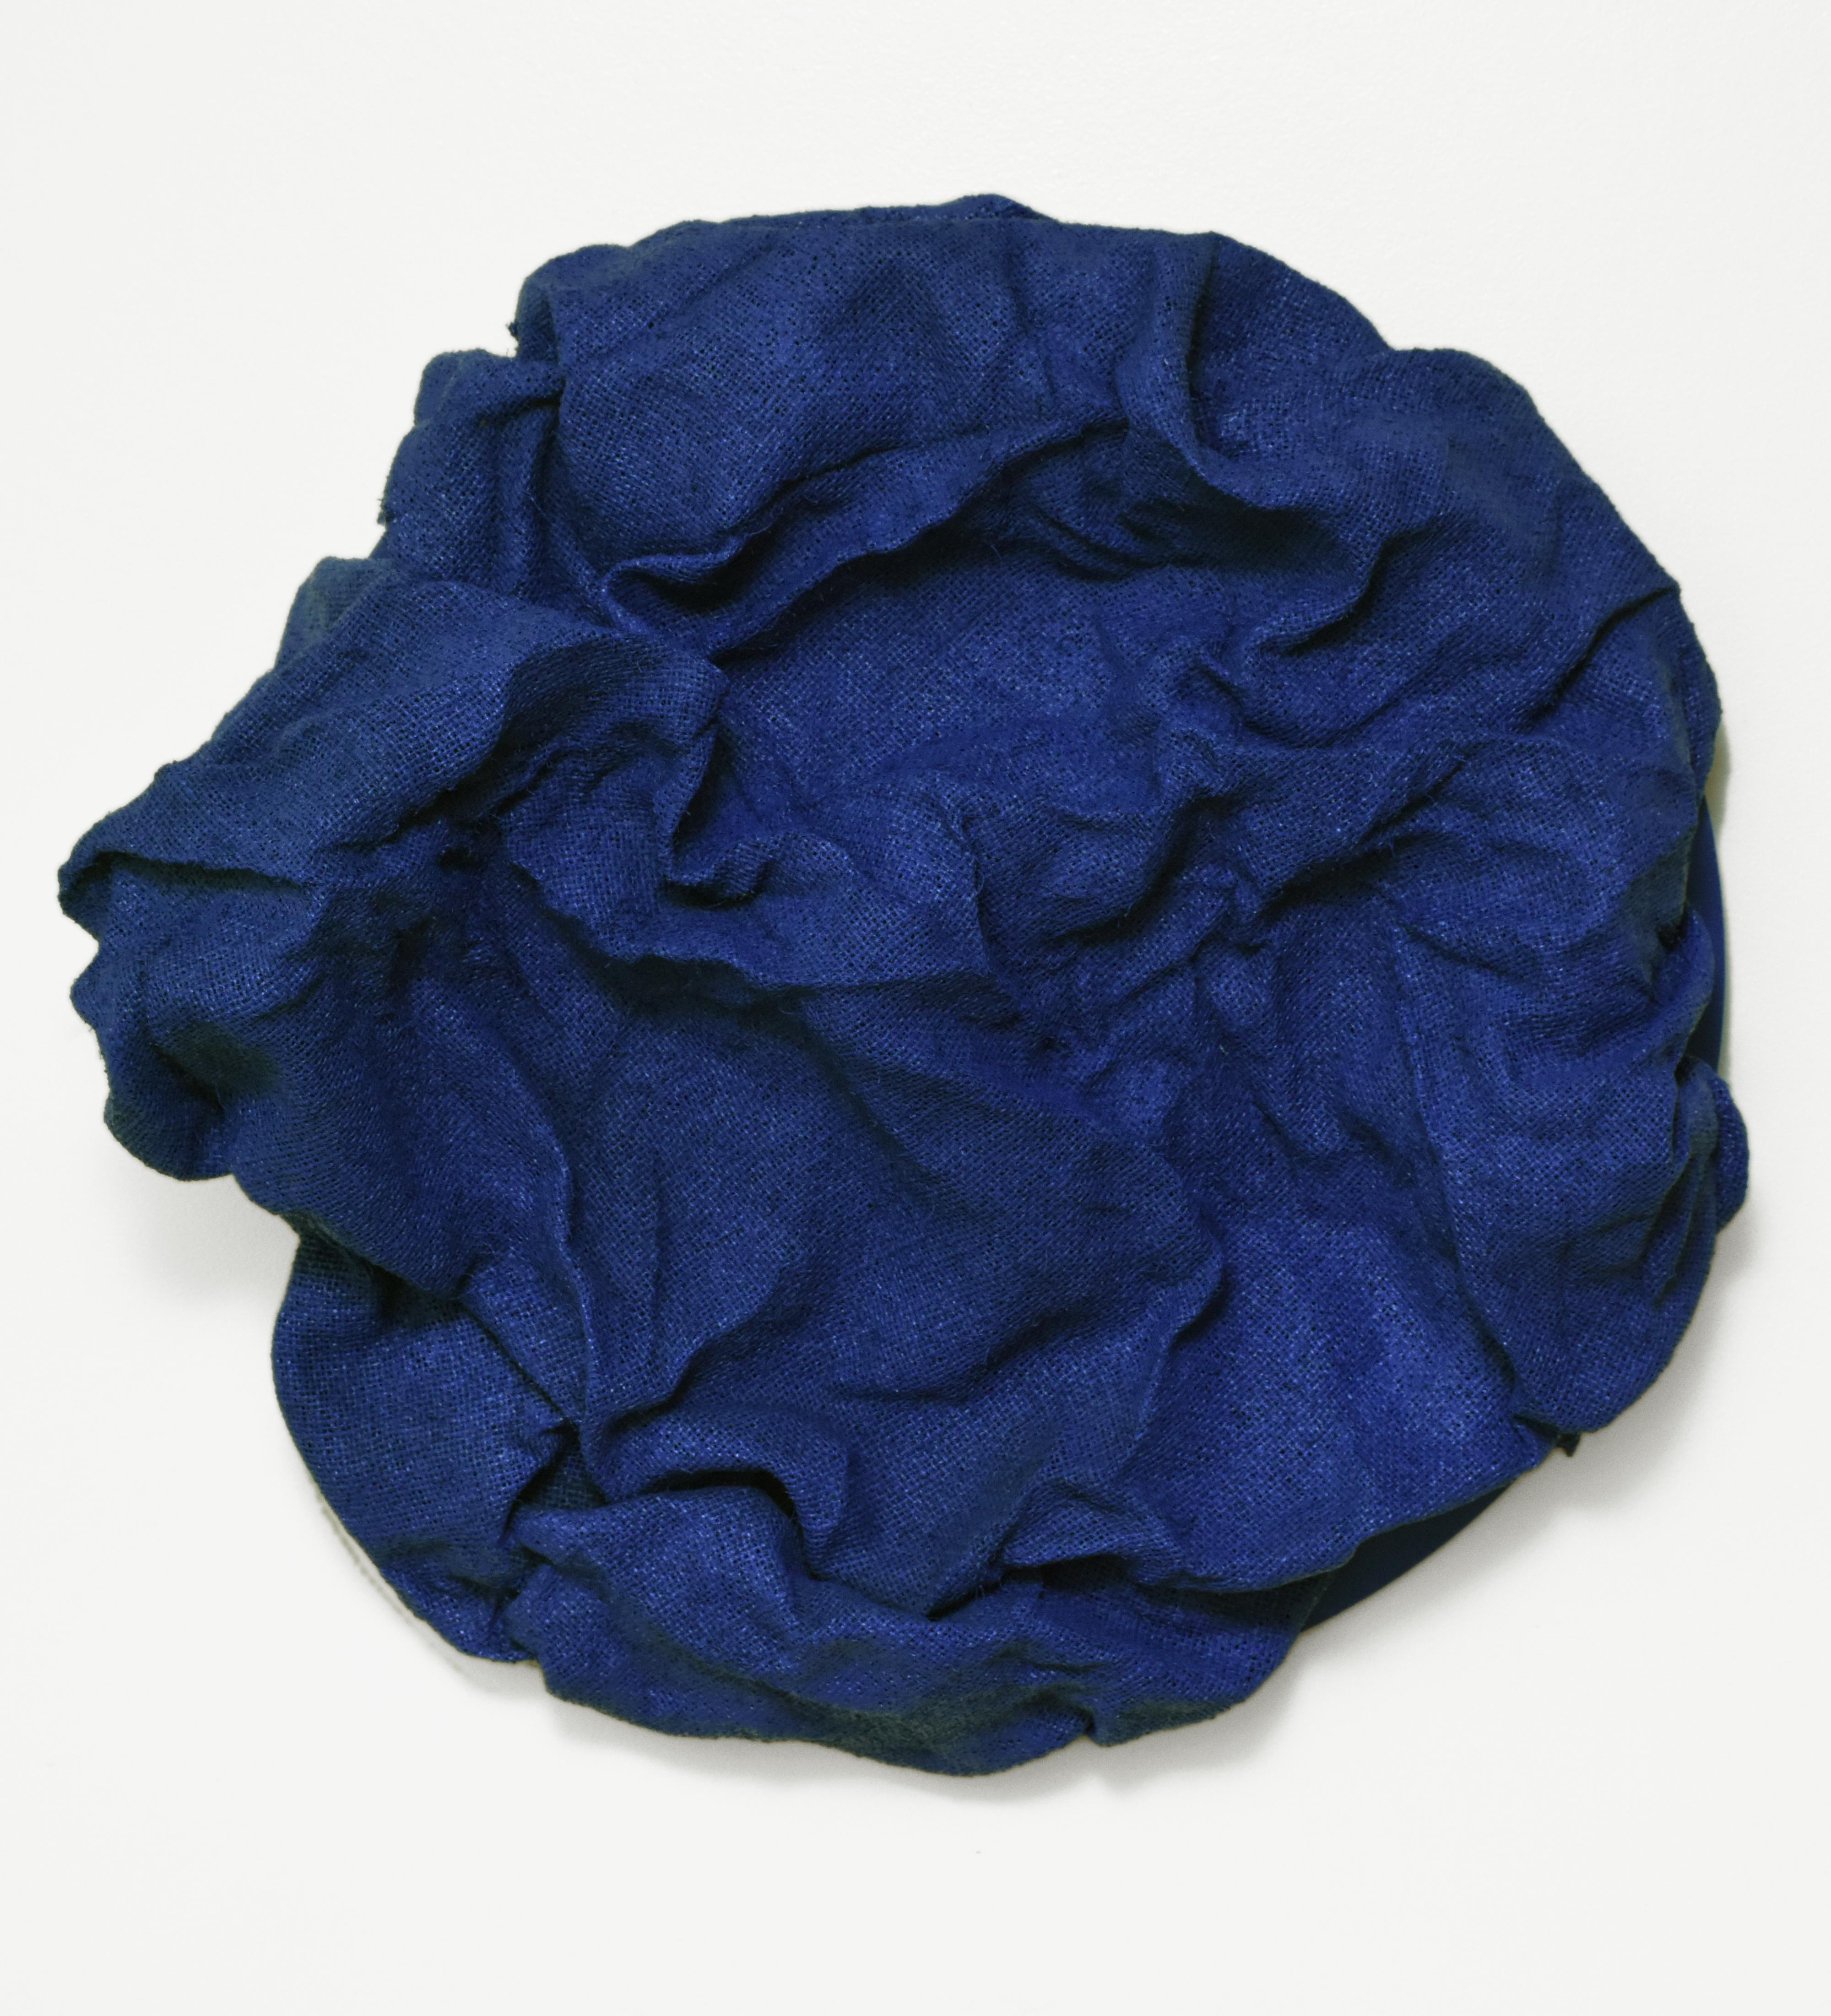 Iris Blue Folds (bleu marine, bleu foncé, tissu dur, design contemporain, textile